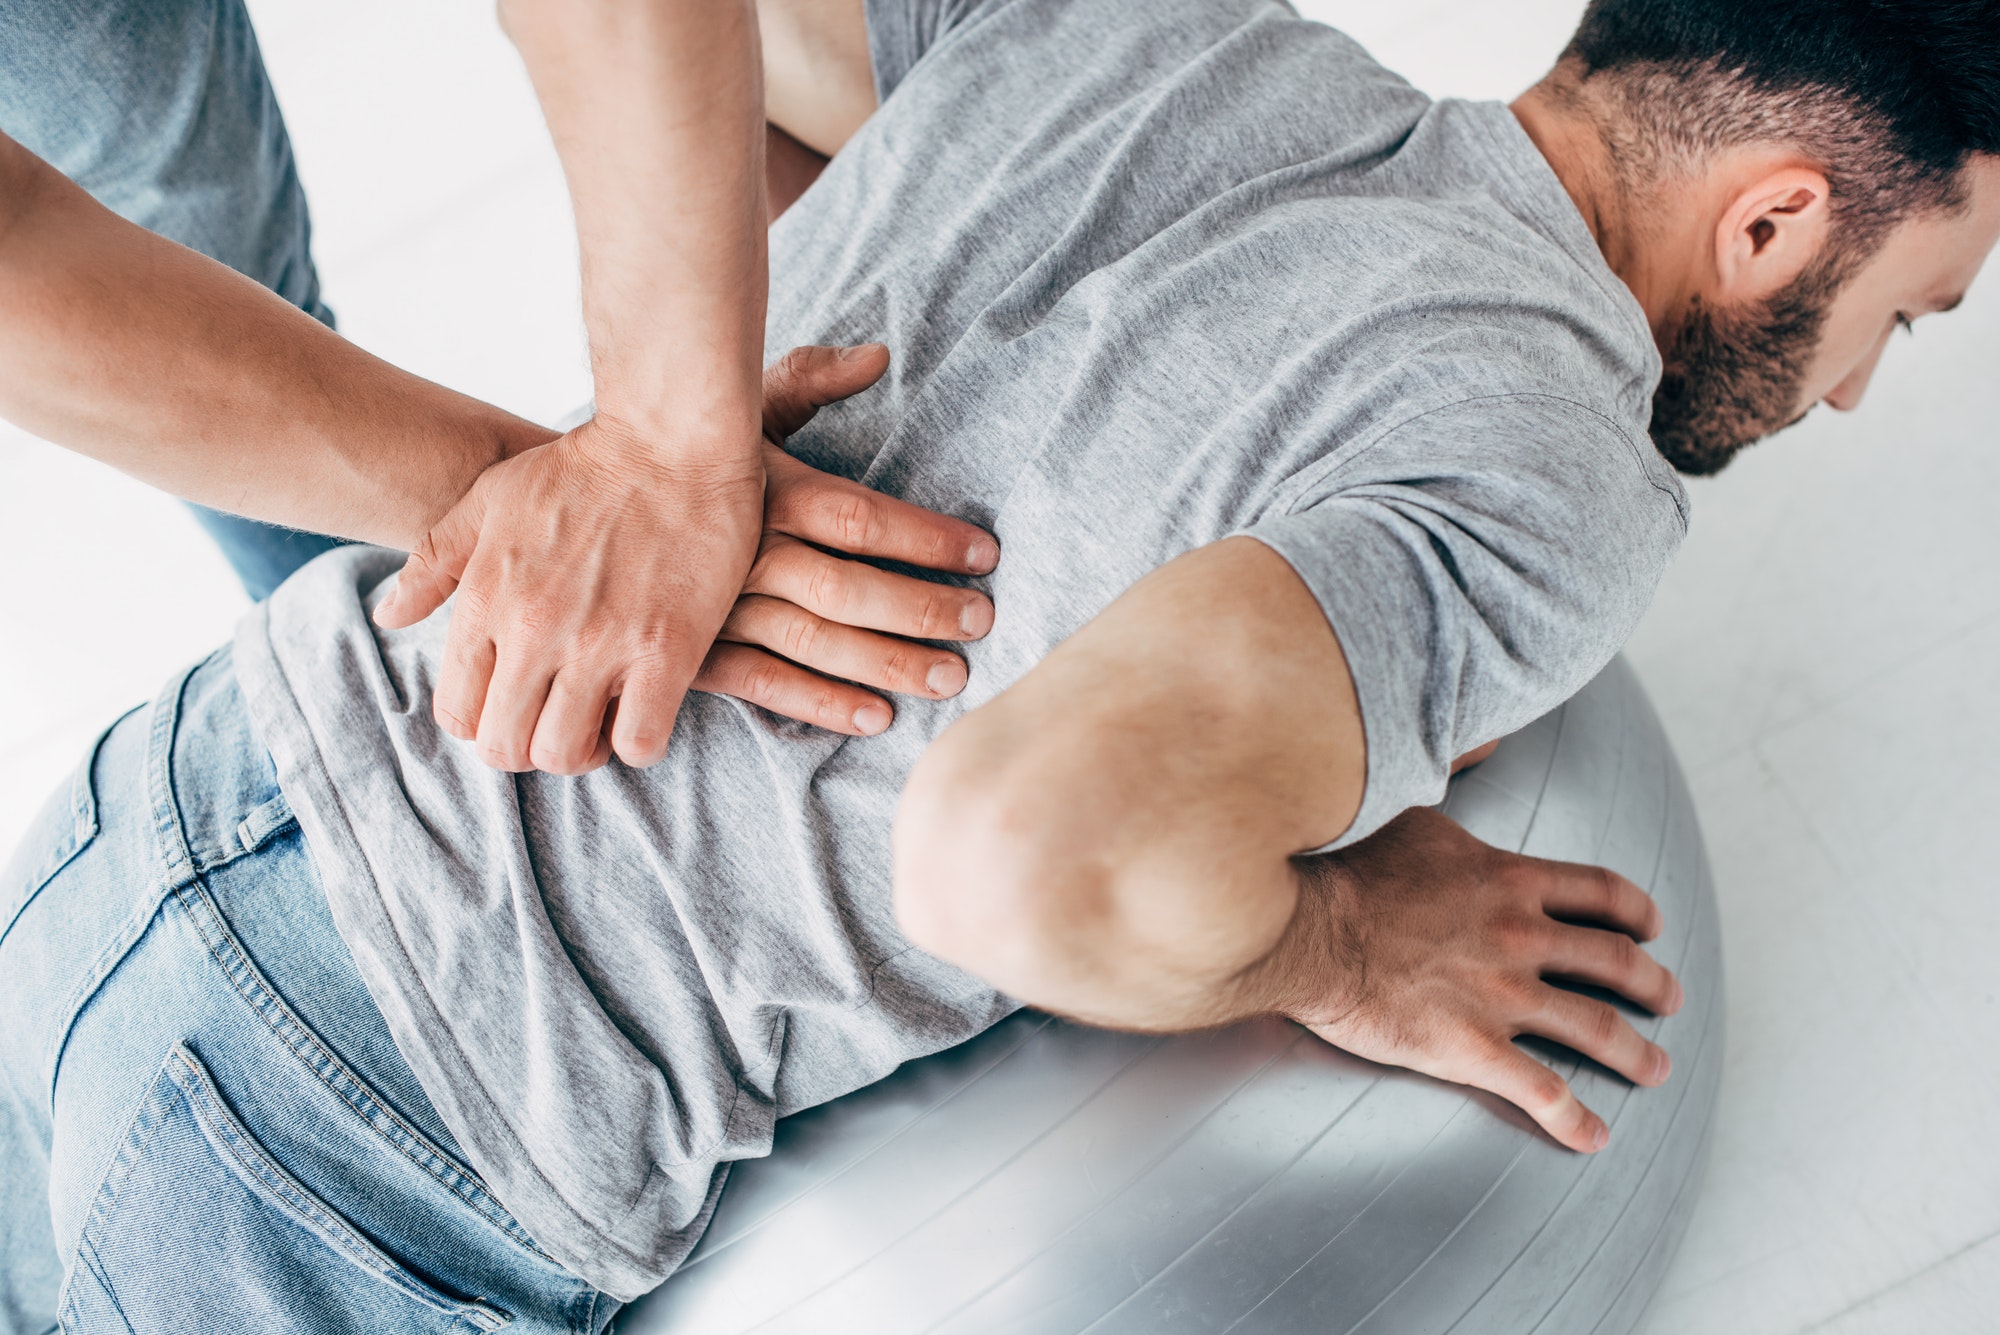 chiropractor massaging back of man lying on fitness ball